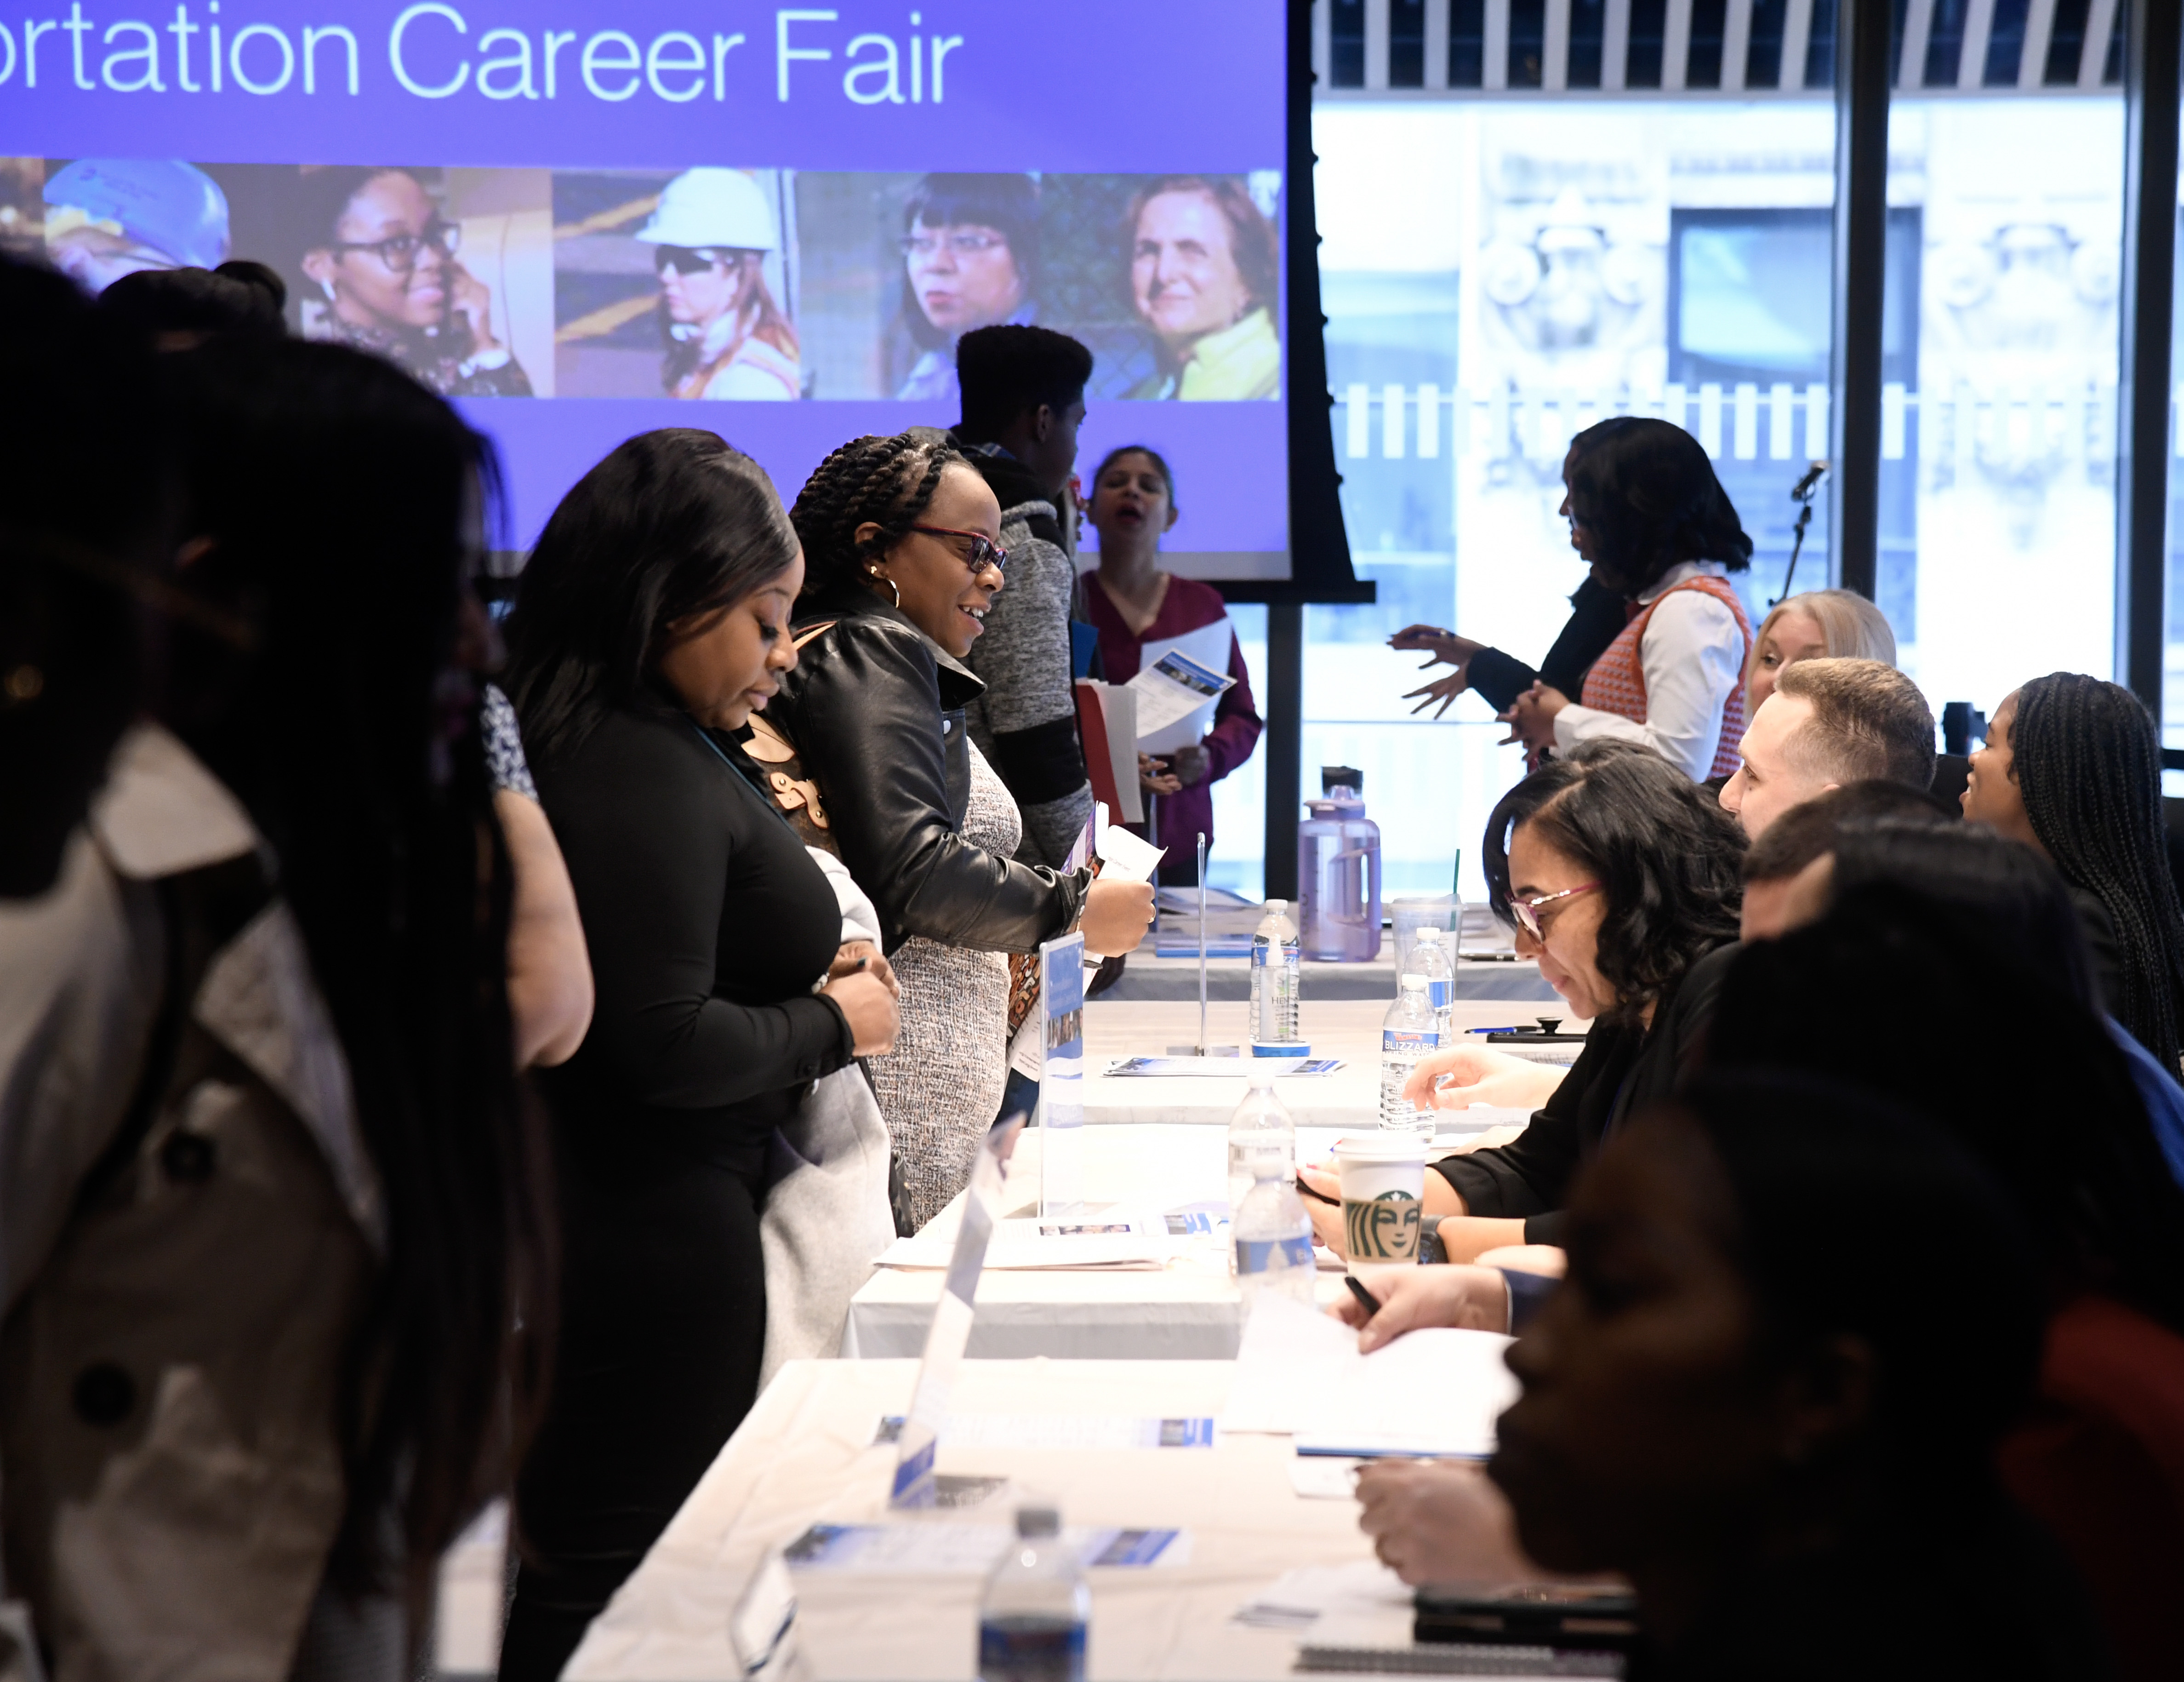 PHOTOS: MTA Hosts Inaugural ‘Empowering Women in Transportation’ Career Fair